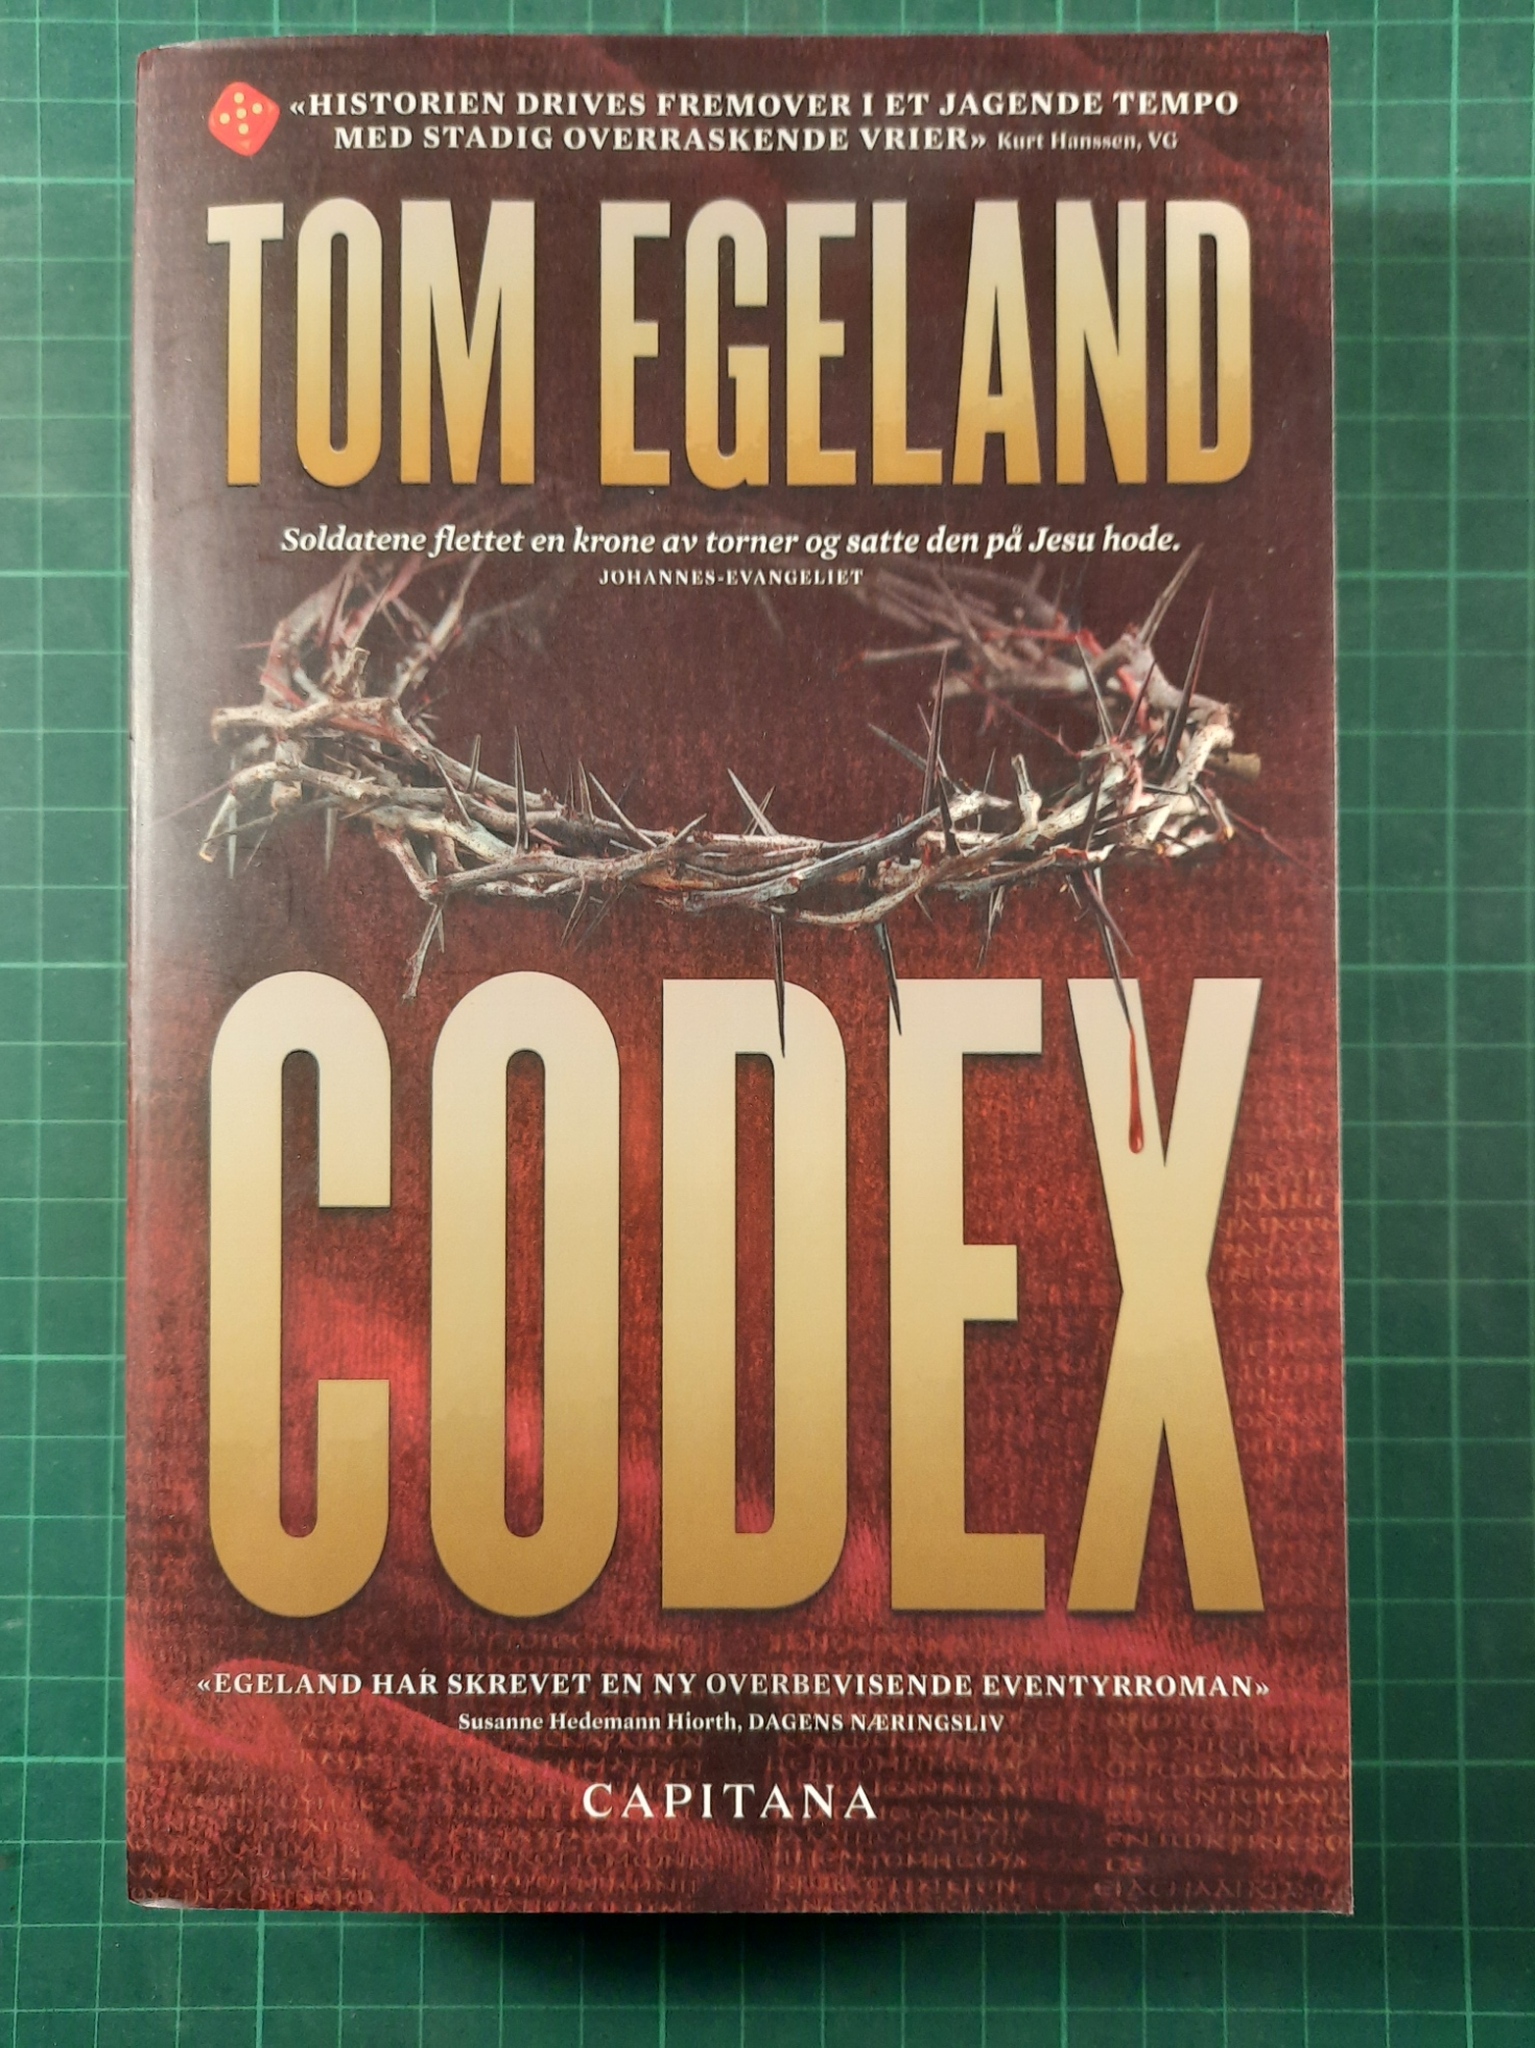 Tom Egeland : Codex